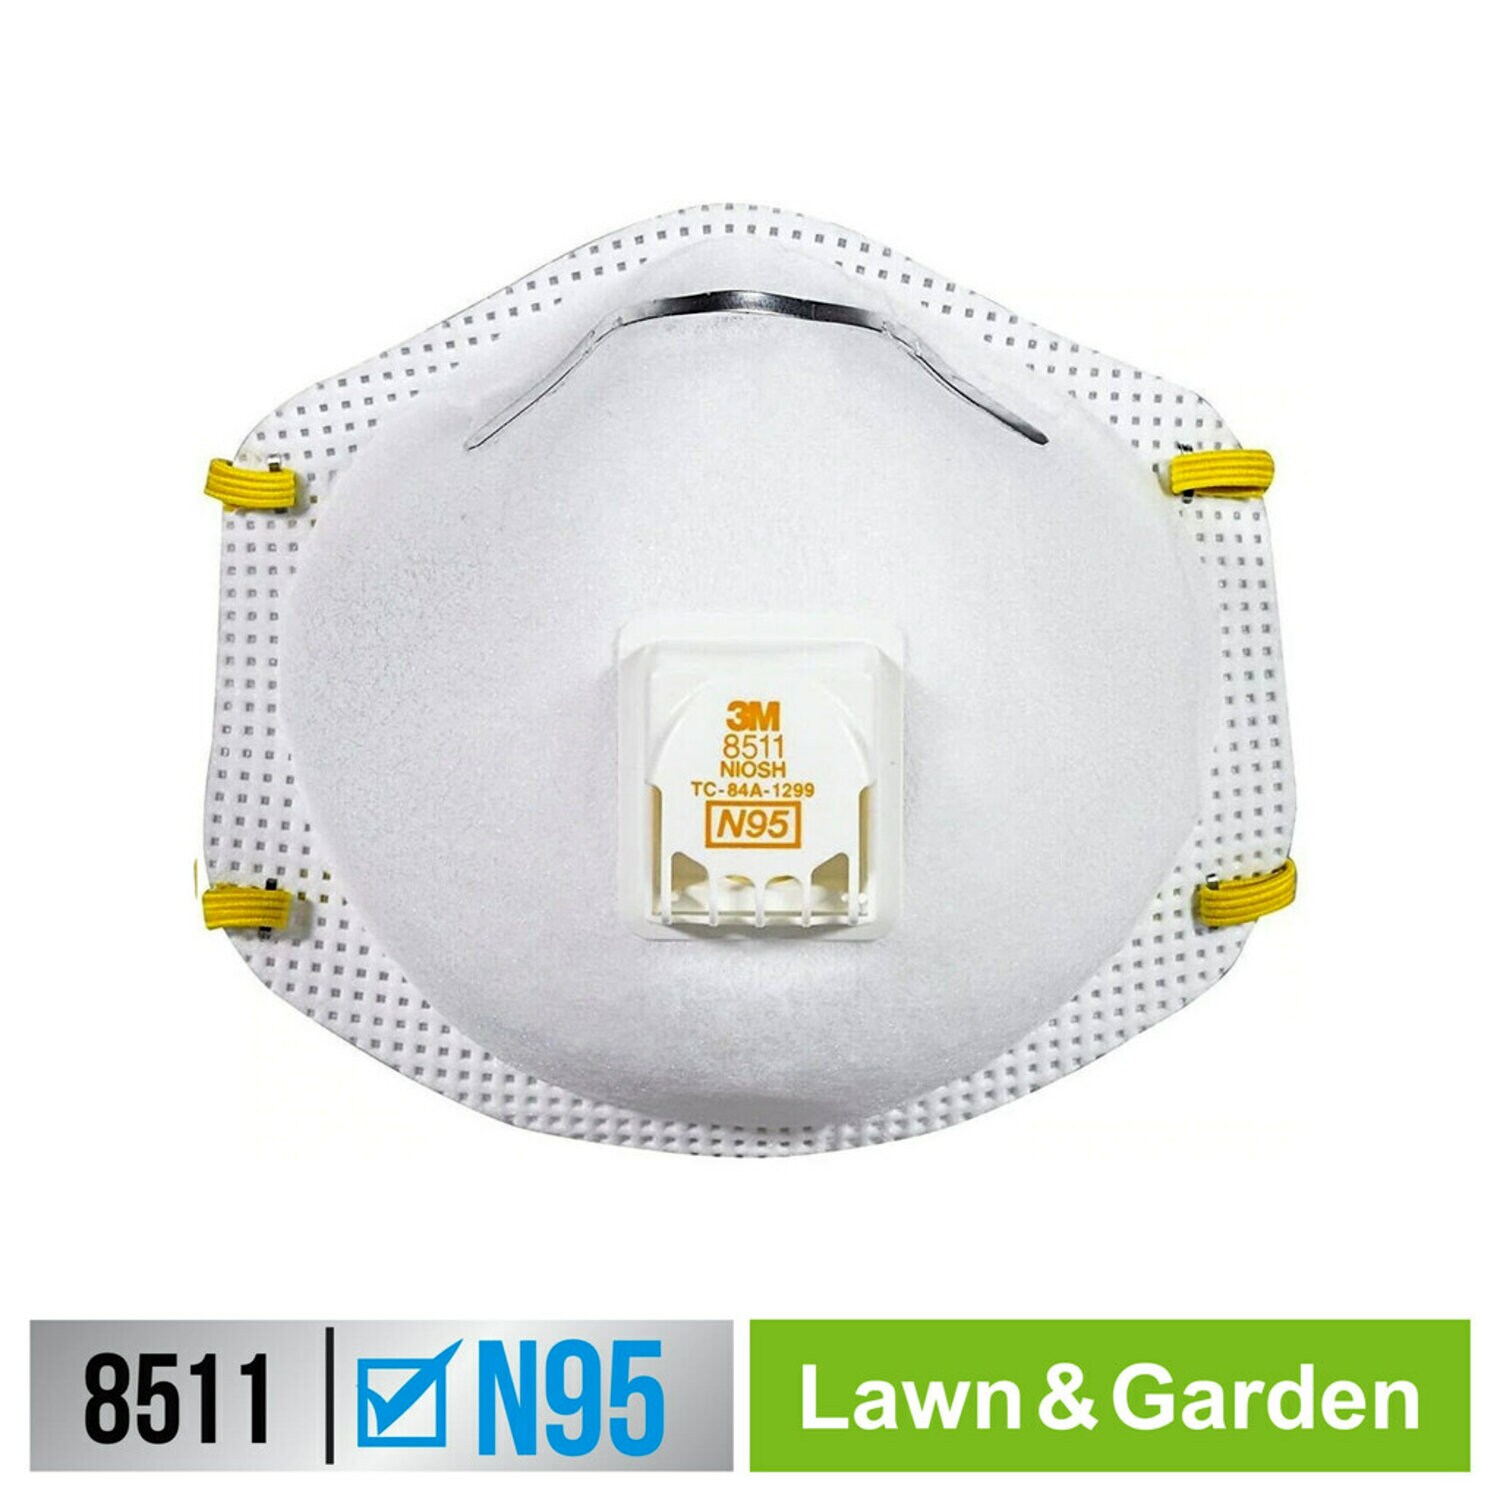 7100117611 - 3M Lawn & Garden Valved Respirator 8511G2-C-PS, 2 each/pack, 6
packs/case